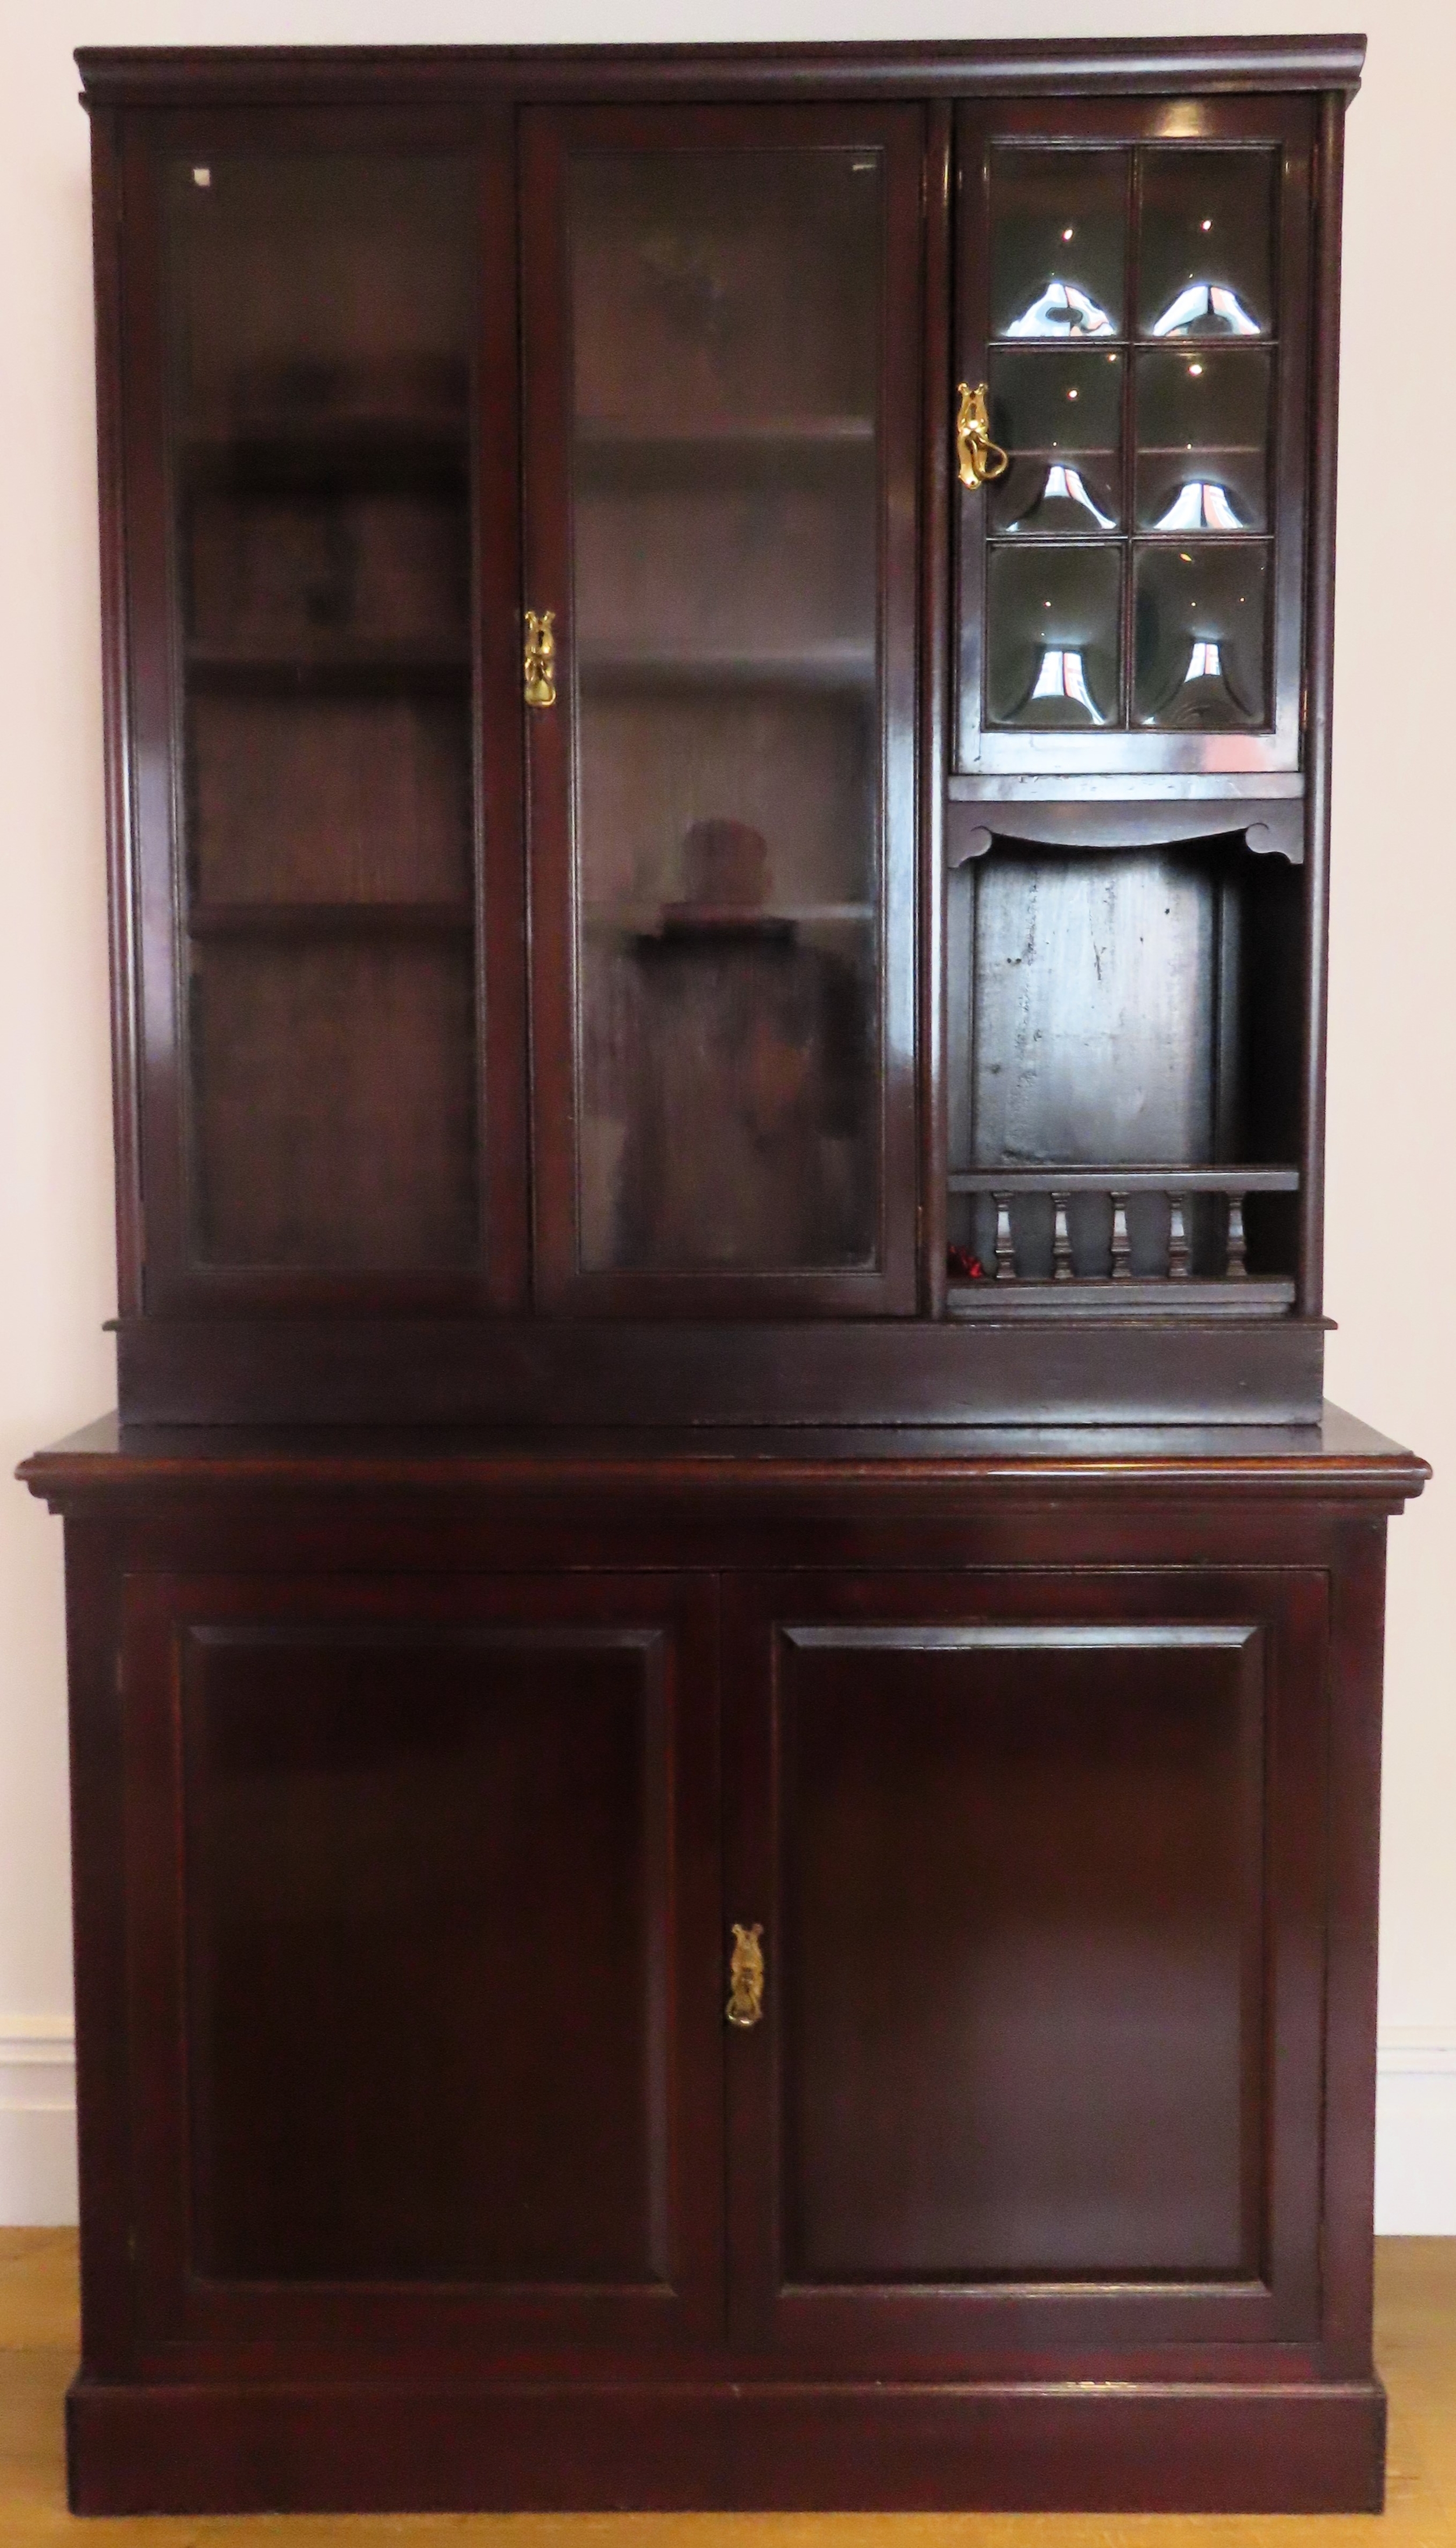 20th century mahogany glazed wall unit with cupboard doors below. Approx. 209cm H x 117cm W x 44cm D